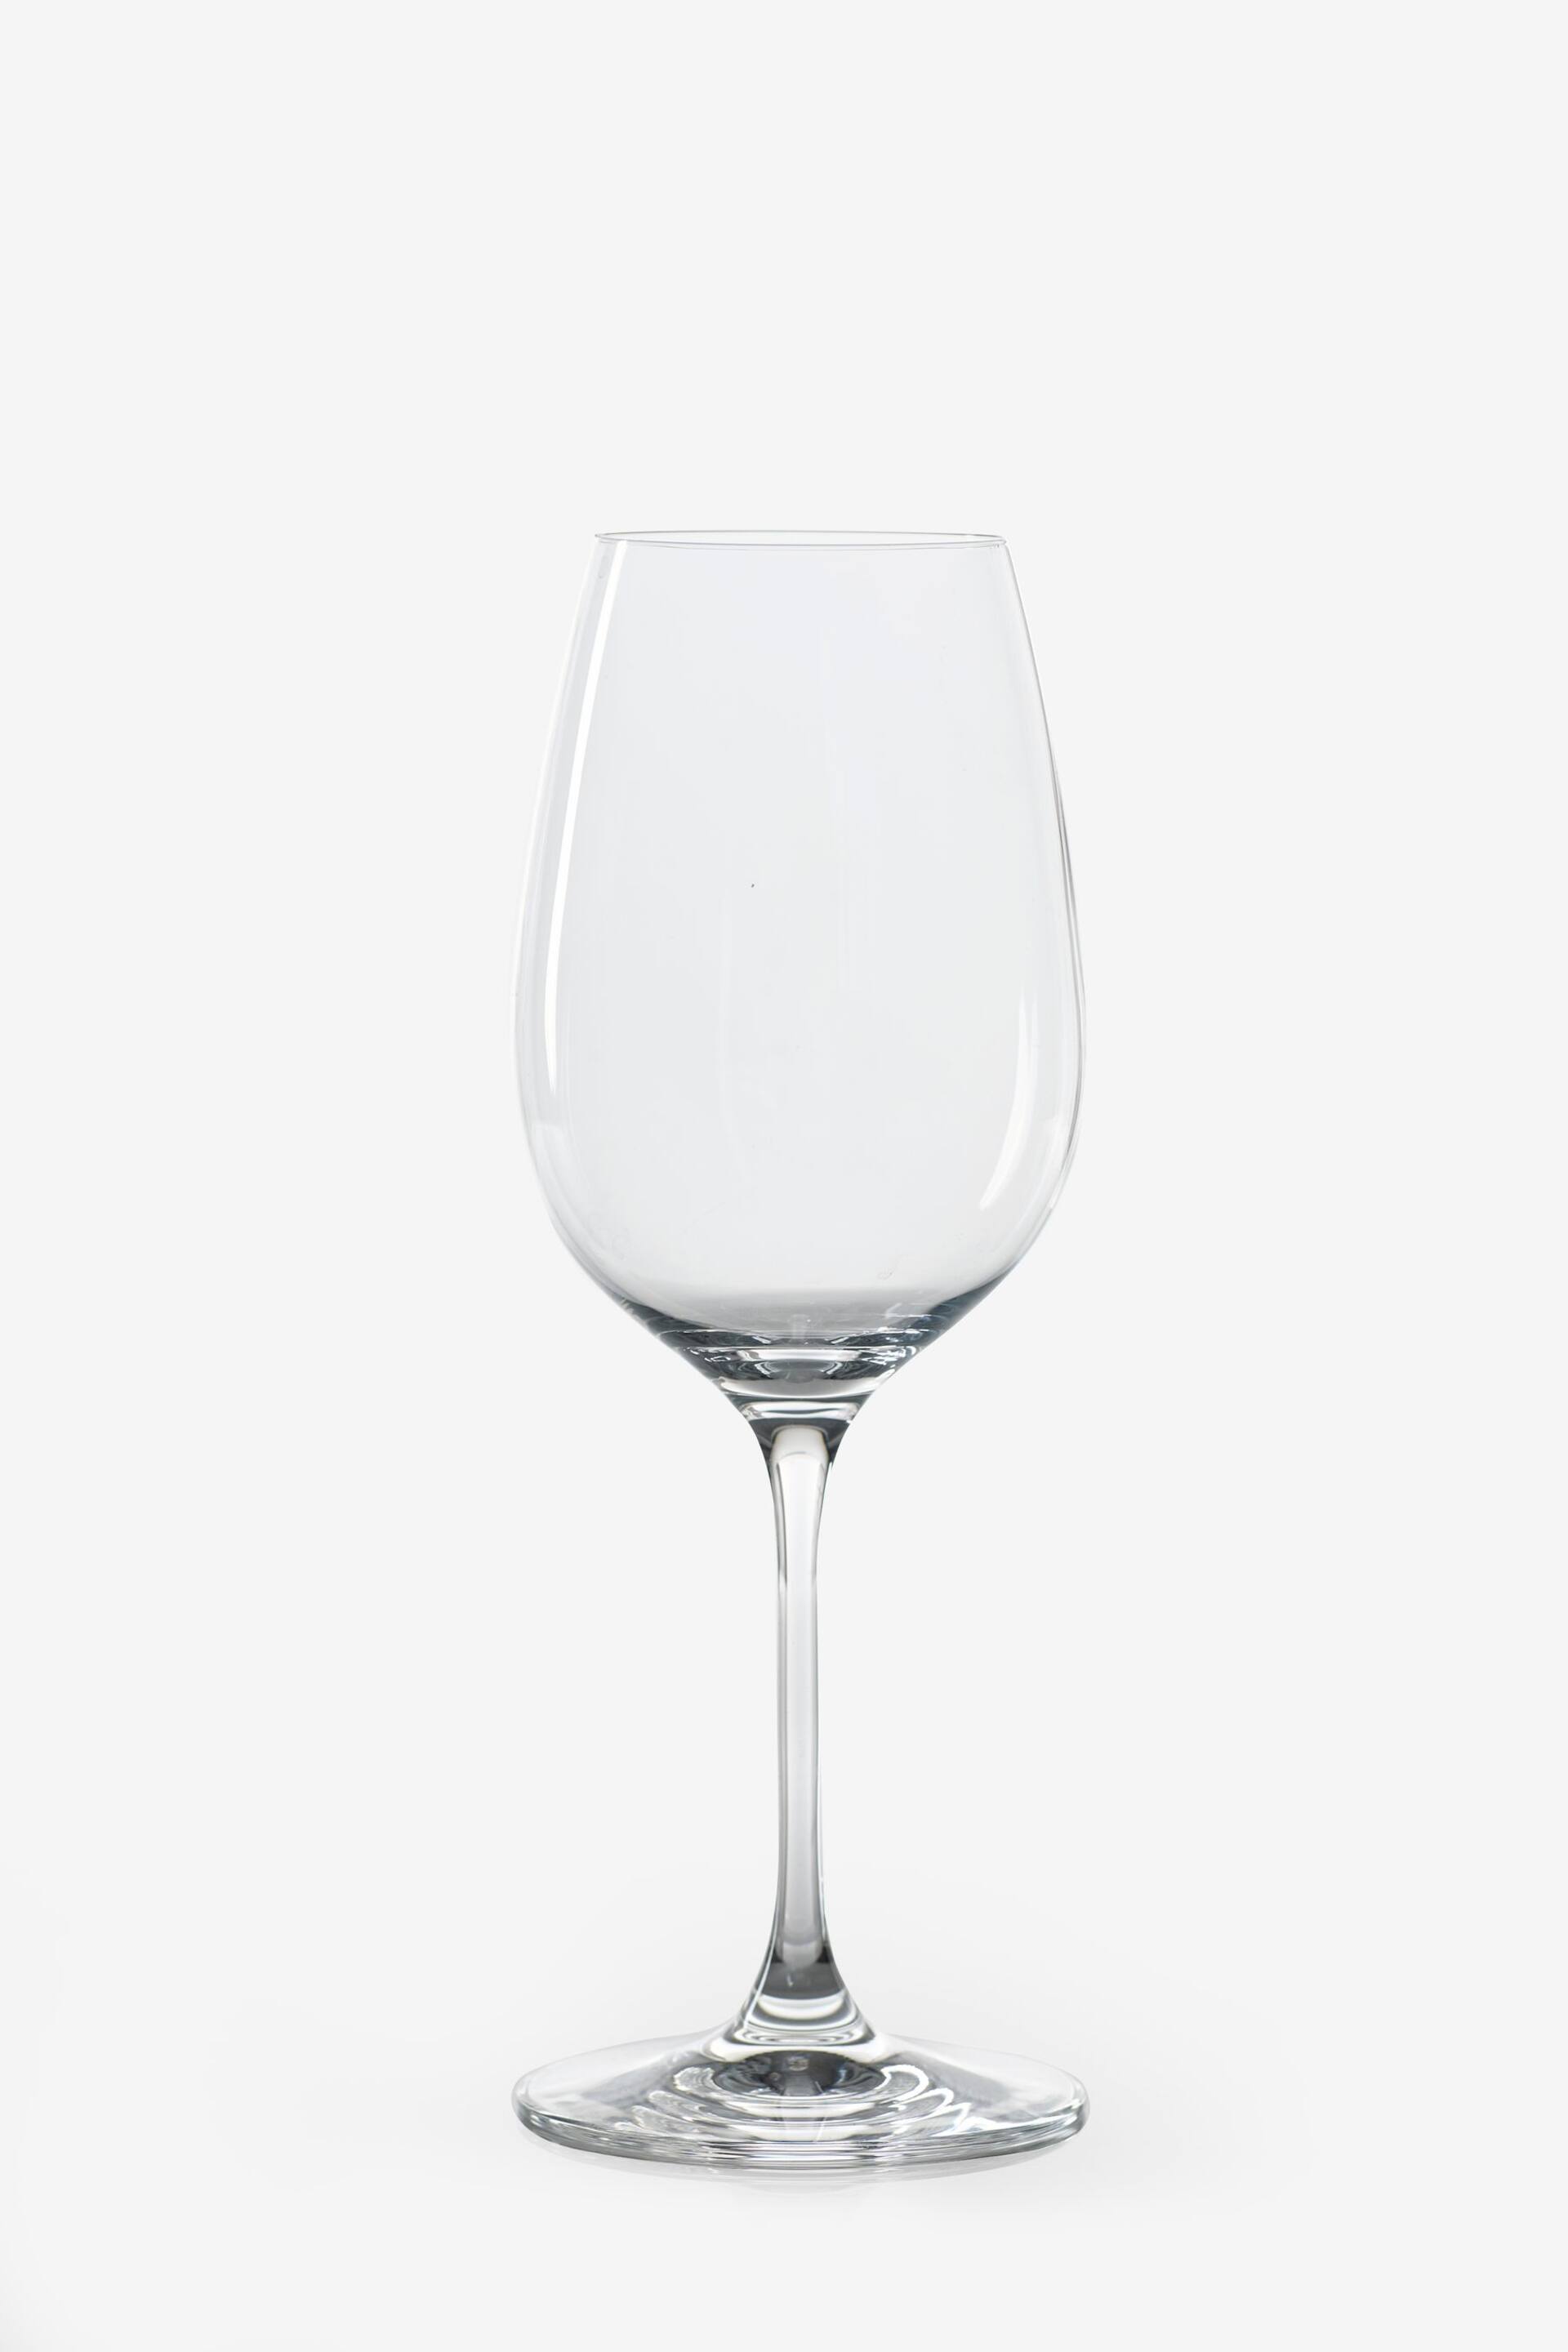 Clear Nova Wine Glasses Set of 4 White Wine Glasses - Image 4 of 4